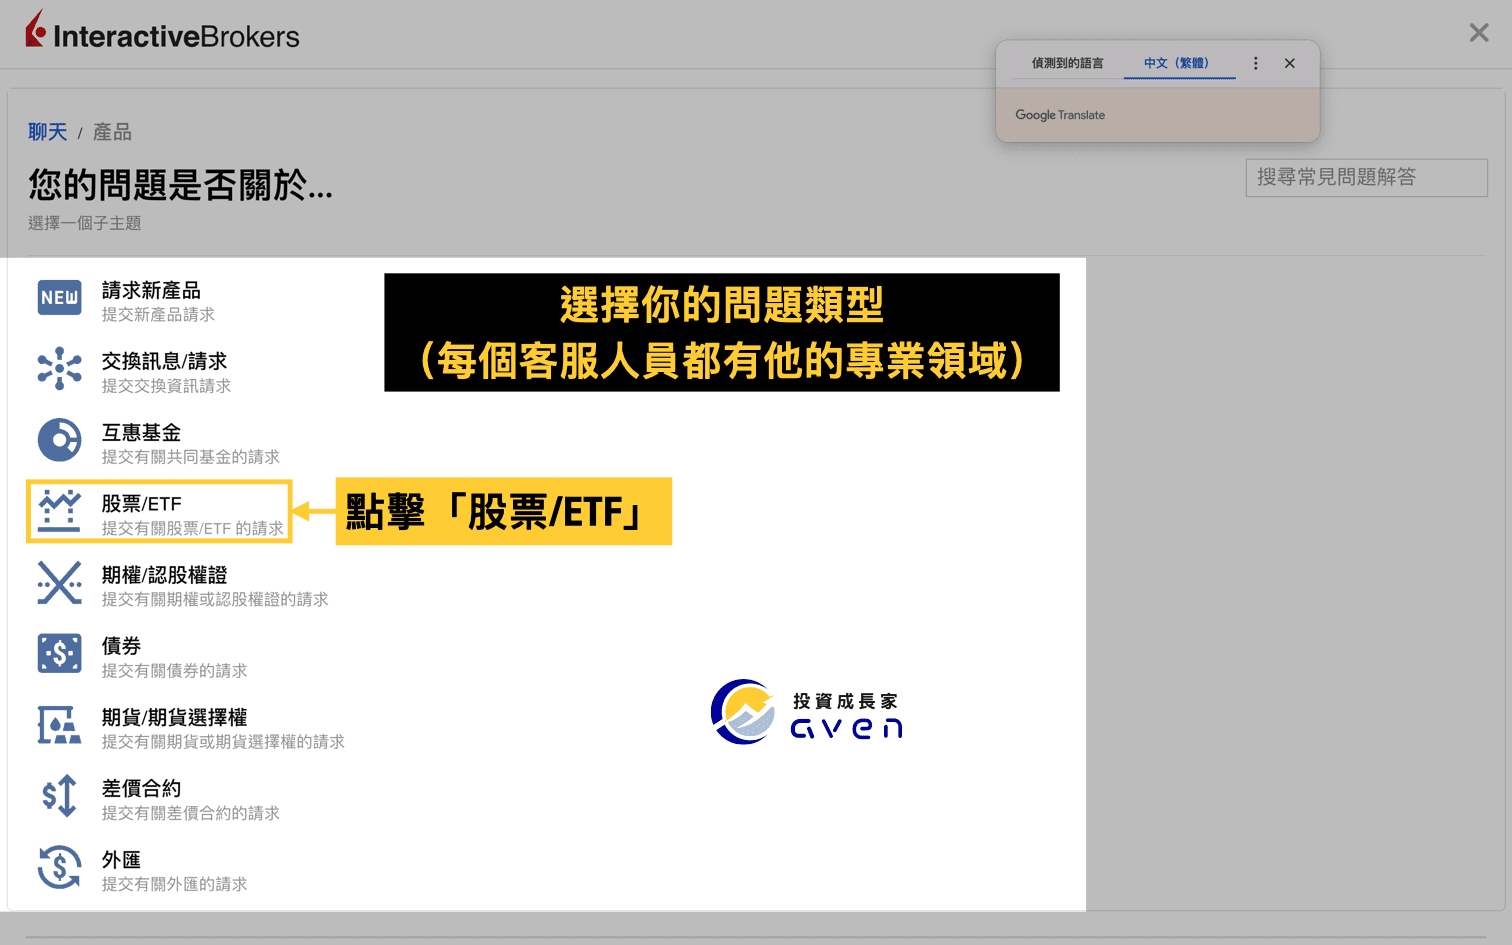 IB盈透證券 interactive brokers 台灣中文客服 6